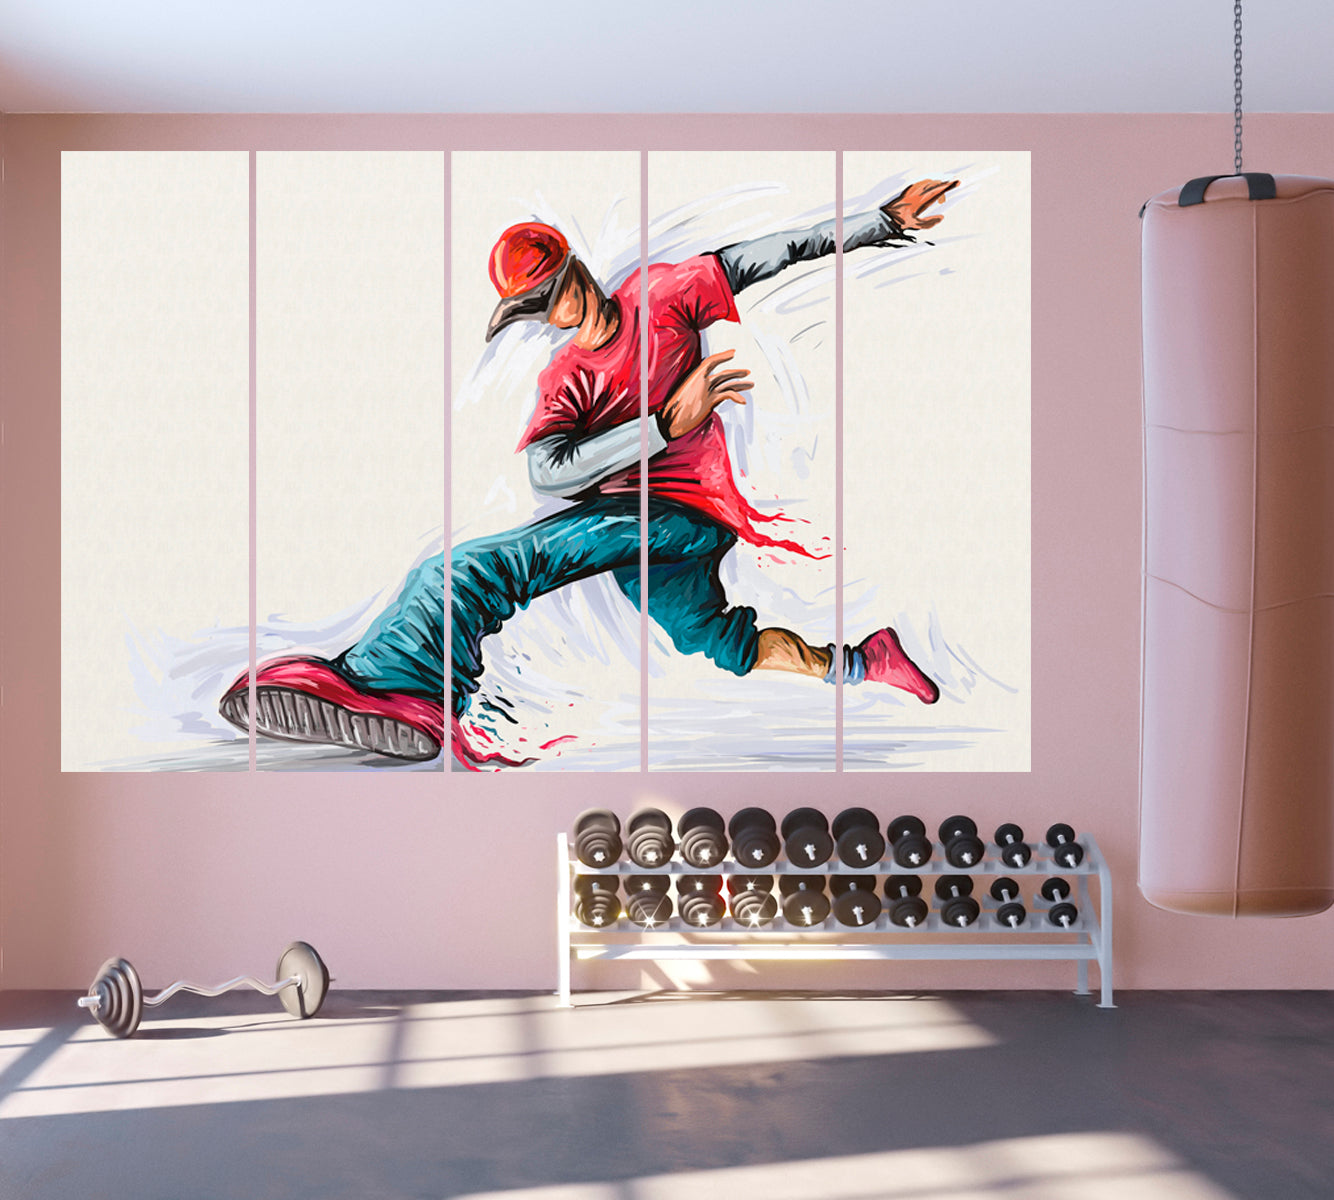 Boy Hip Hop Dance Rap Music Kids Teenager Active Life Concept Fine Art Canvas Print Kids Room Canvas Art Print Artesty 5 panels 36" x 24" 